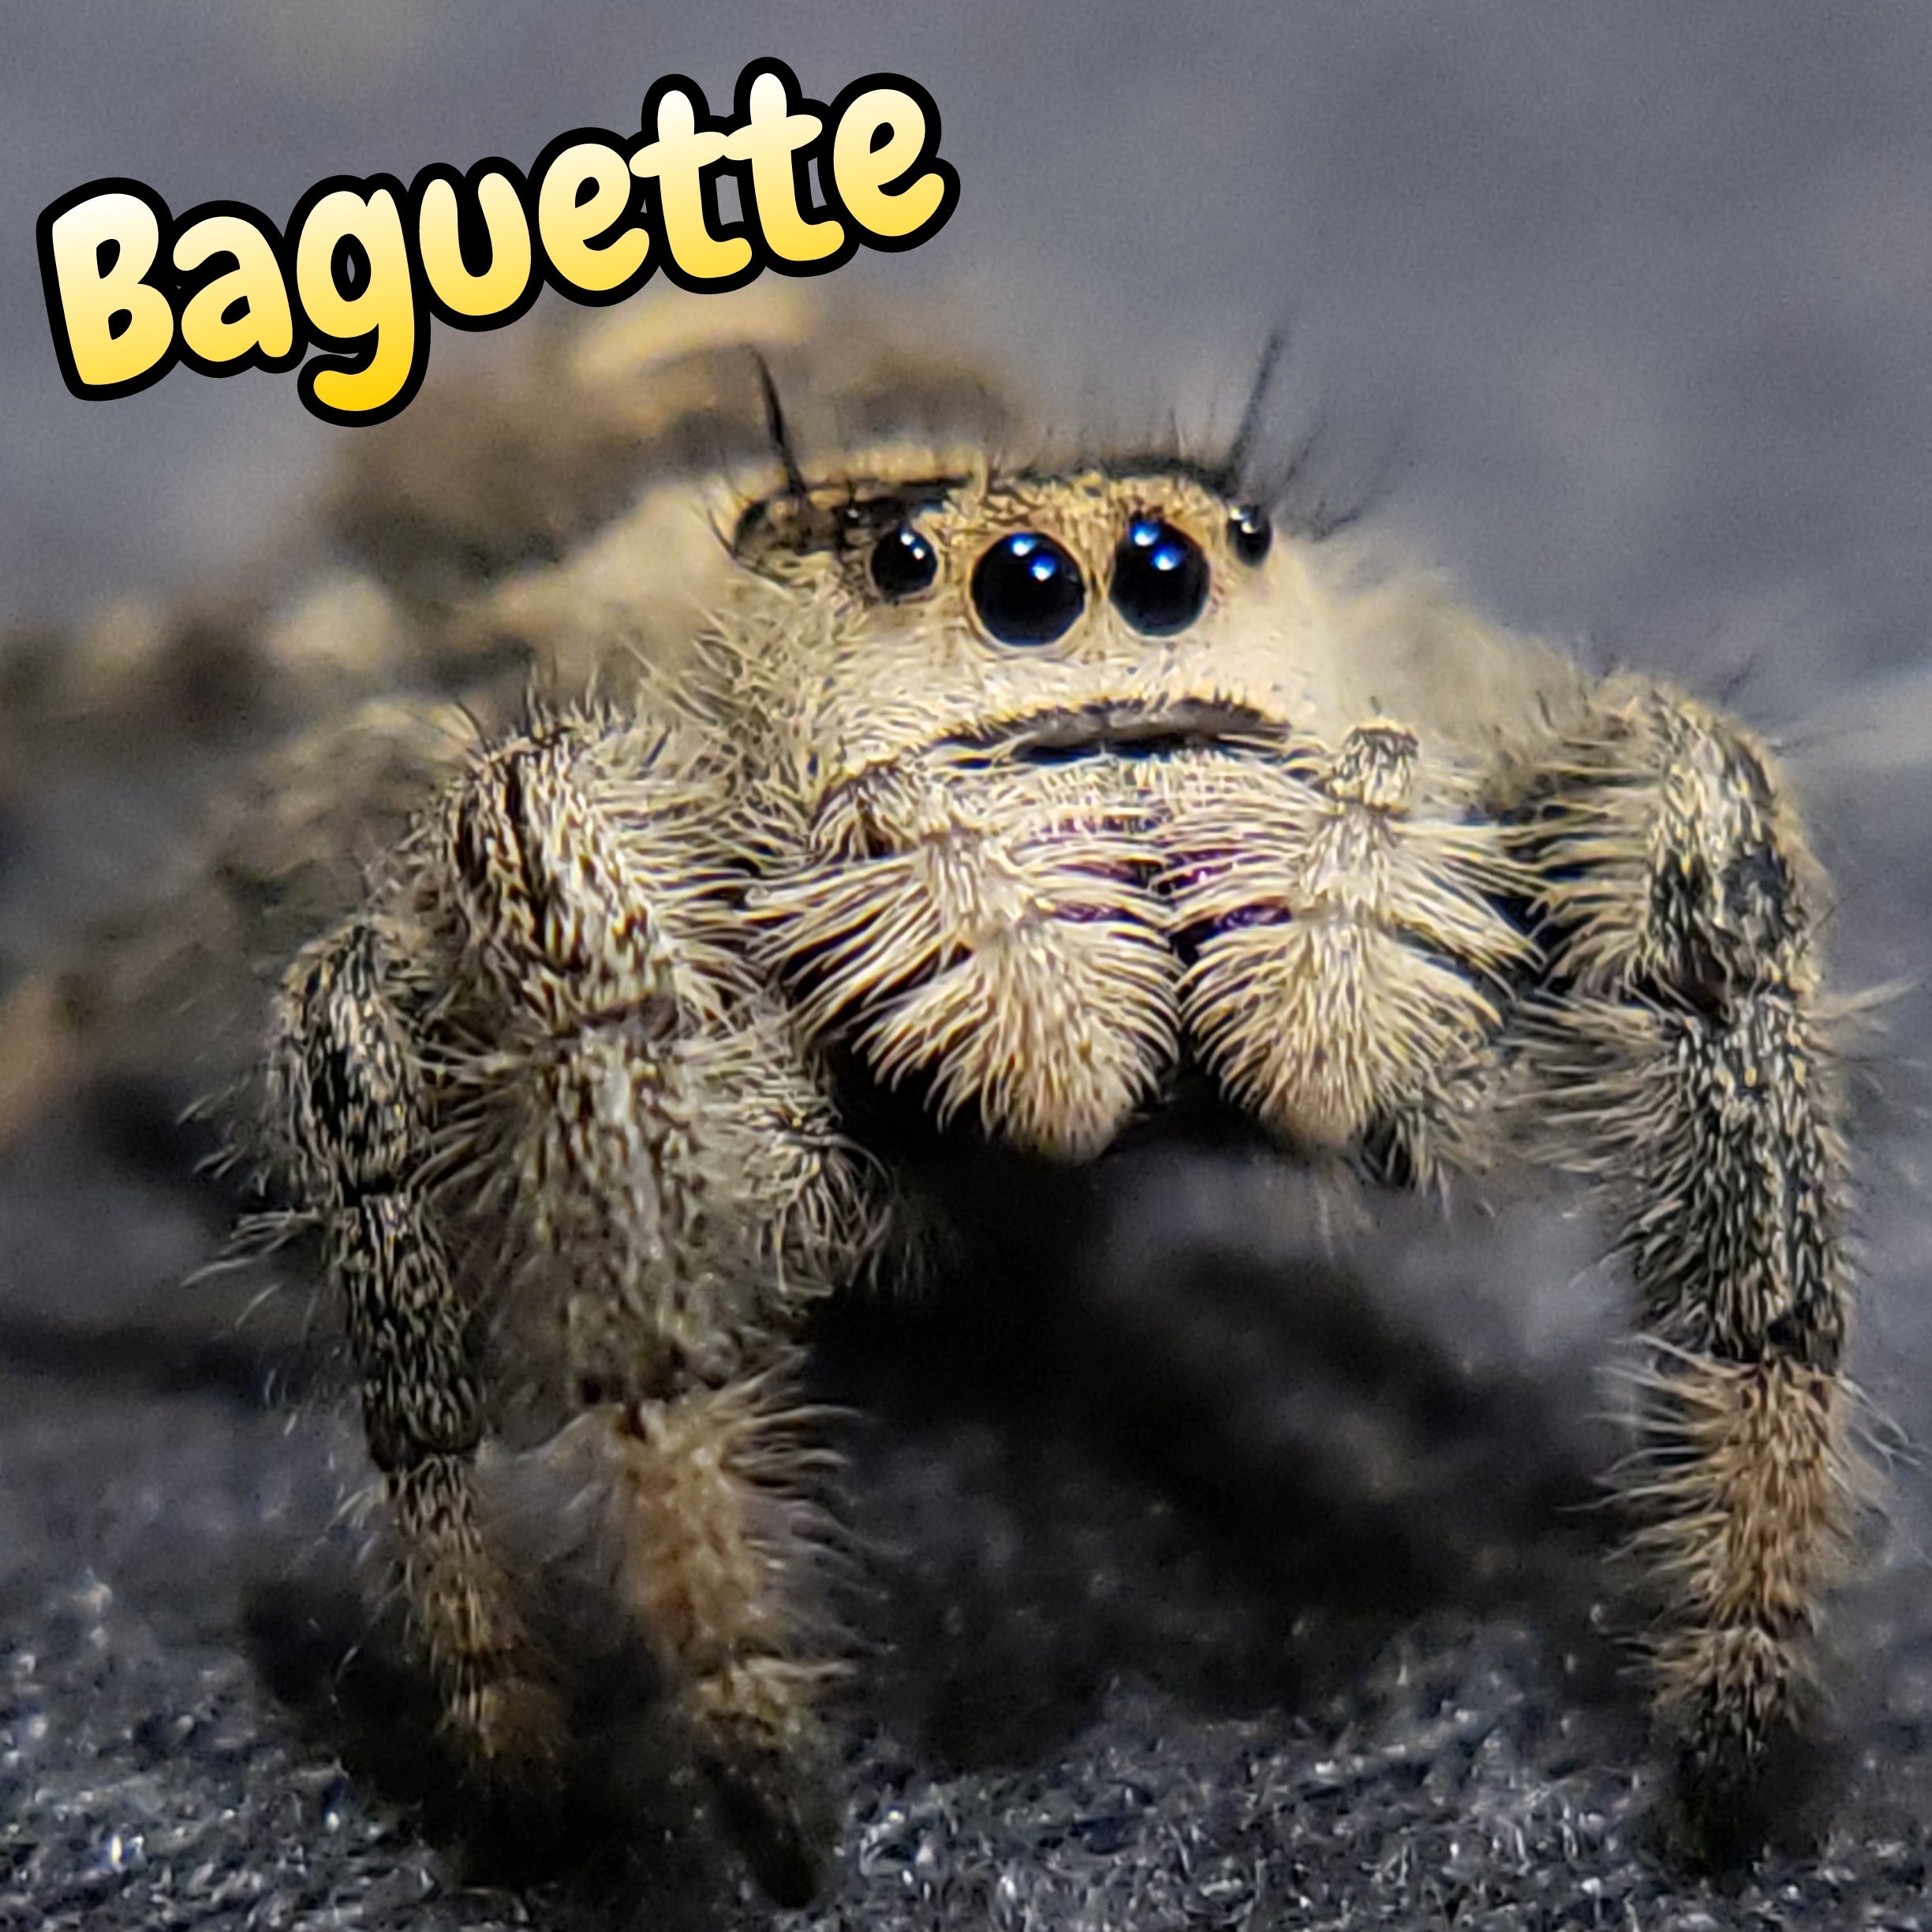 Regal Jumping Spider "Baguette"